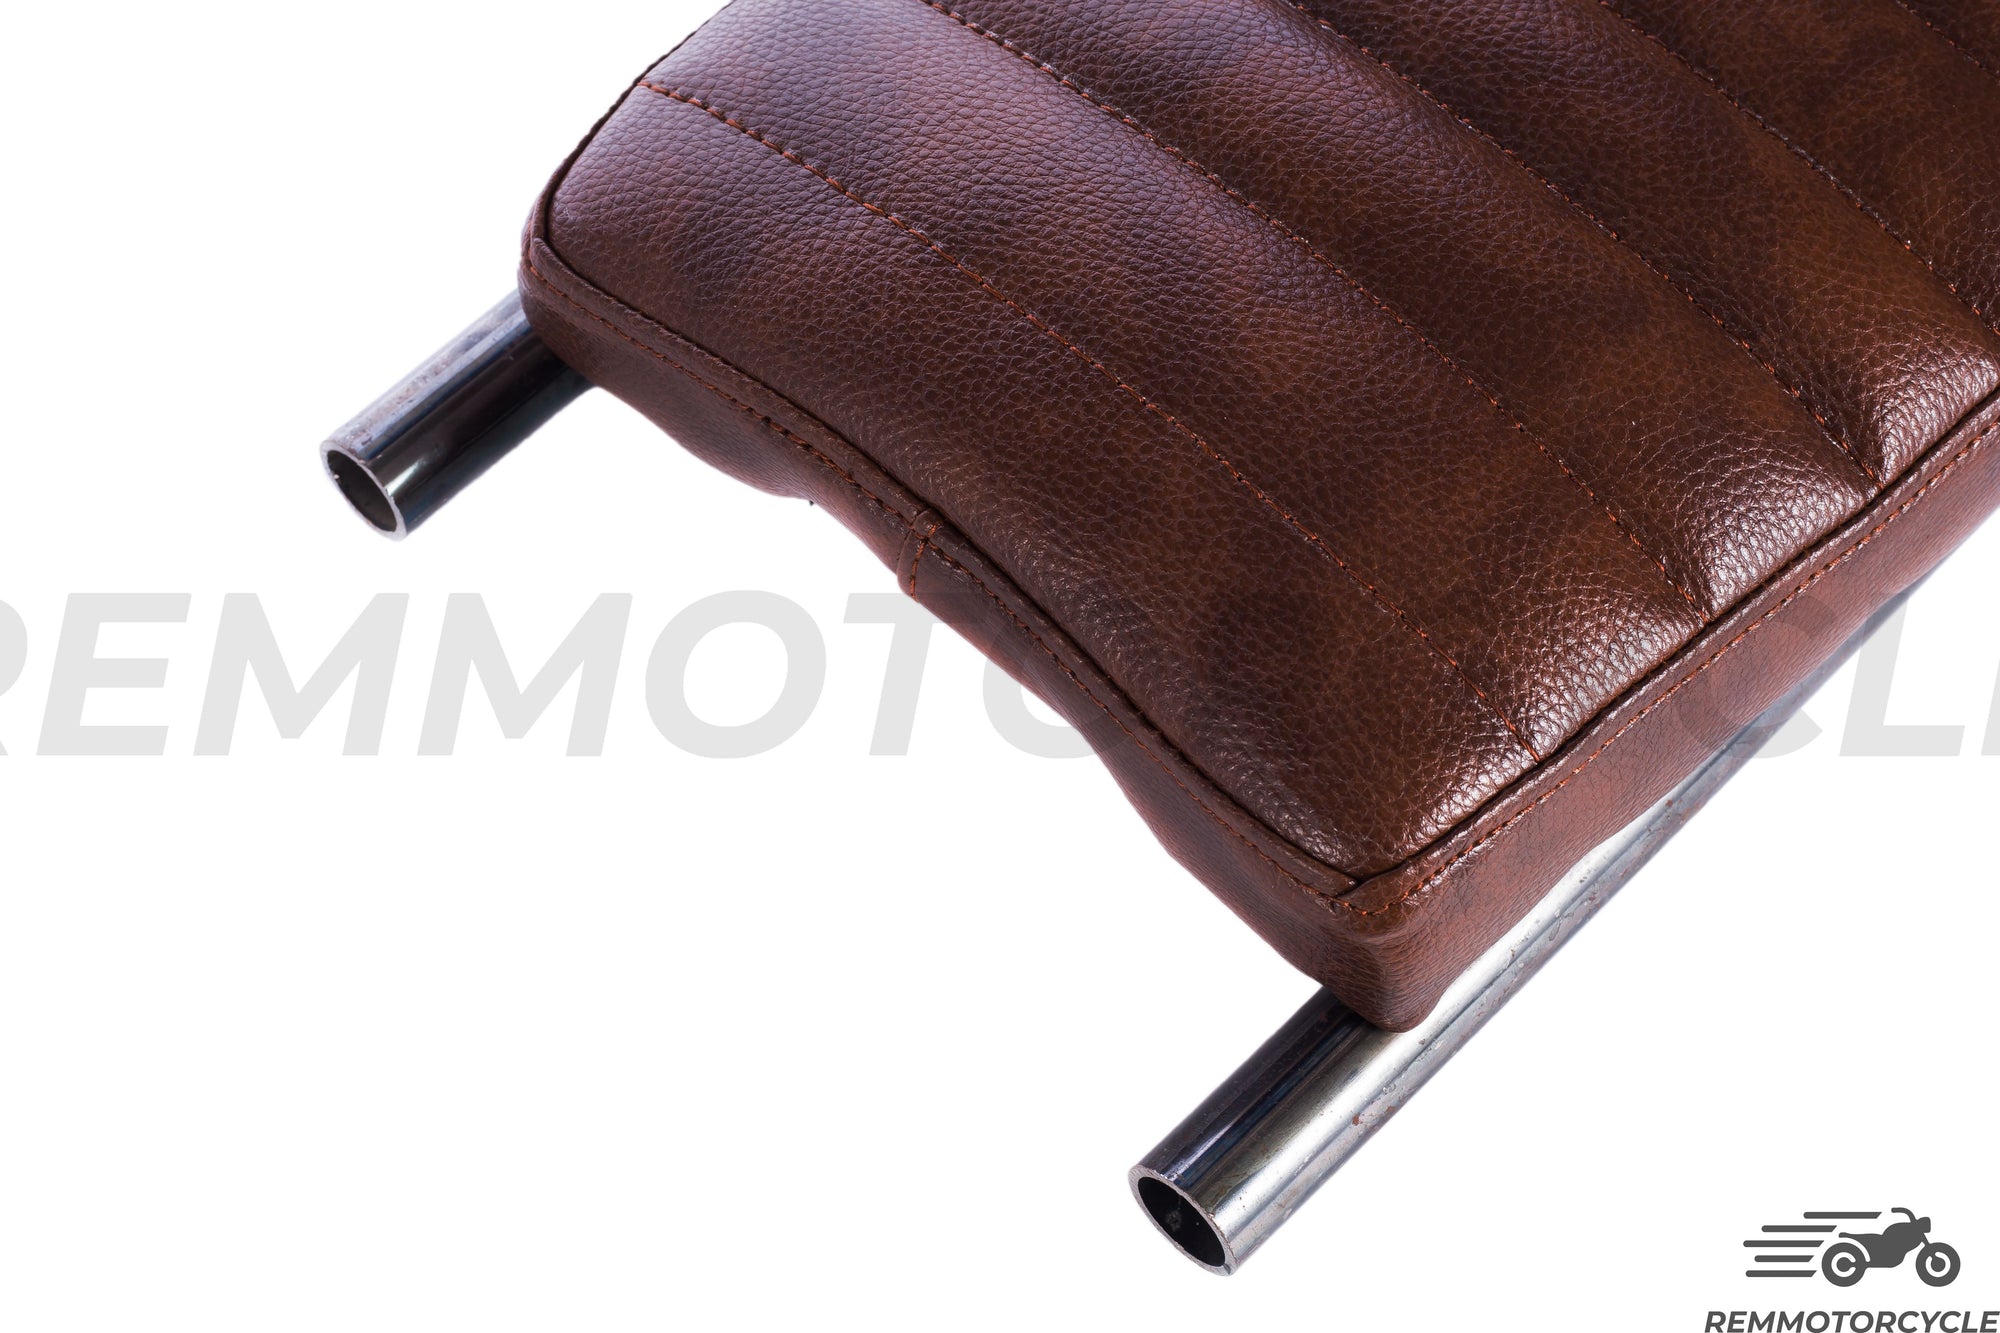 Rediceret brun sadel type 1 metal baggrund 50 cm med loop